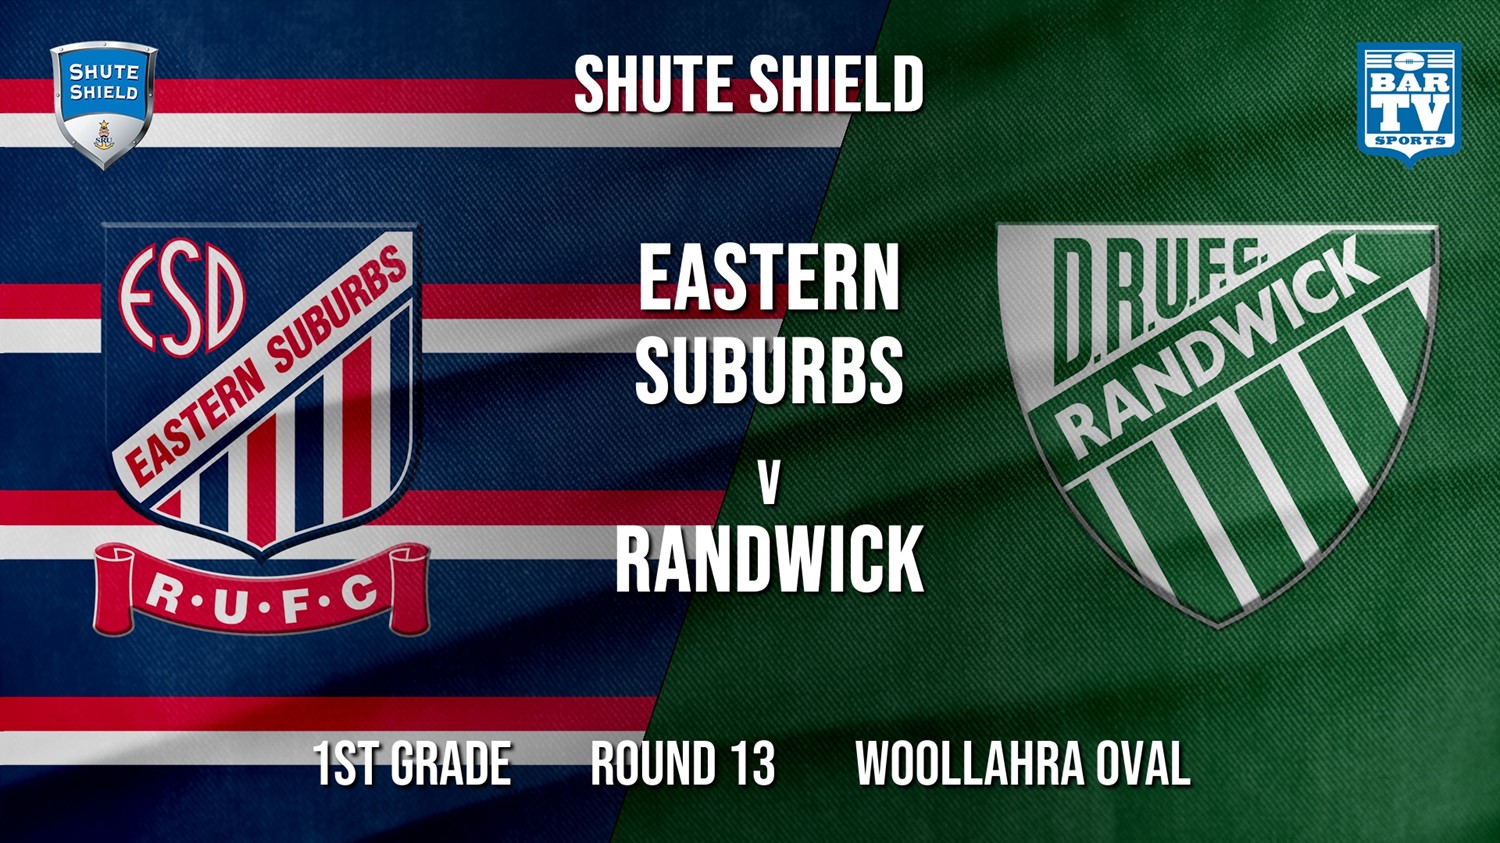 Shute Shield Round 13 - 1st Grade - Eastern Suburbs Sydney v Randwick Minigame Slate Image